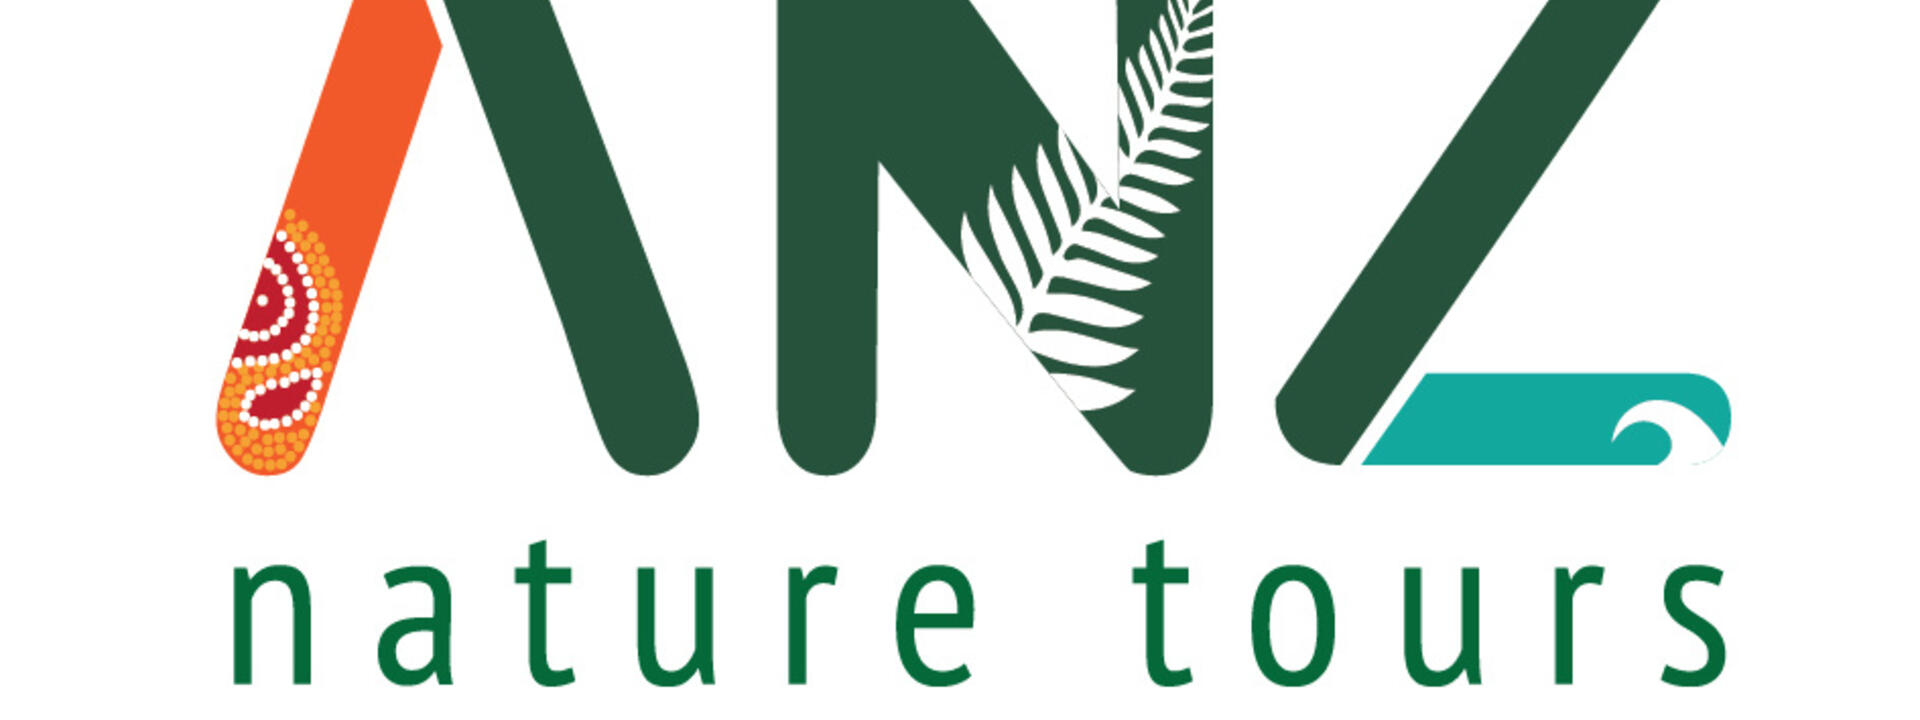 Logo: ANZ Nature Tours Ltd